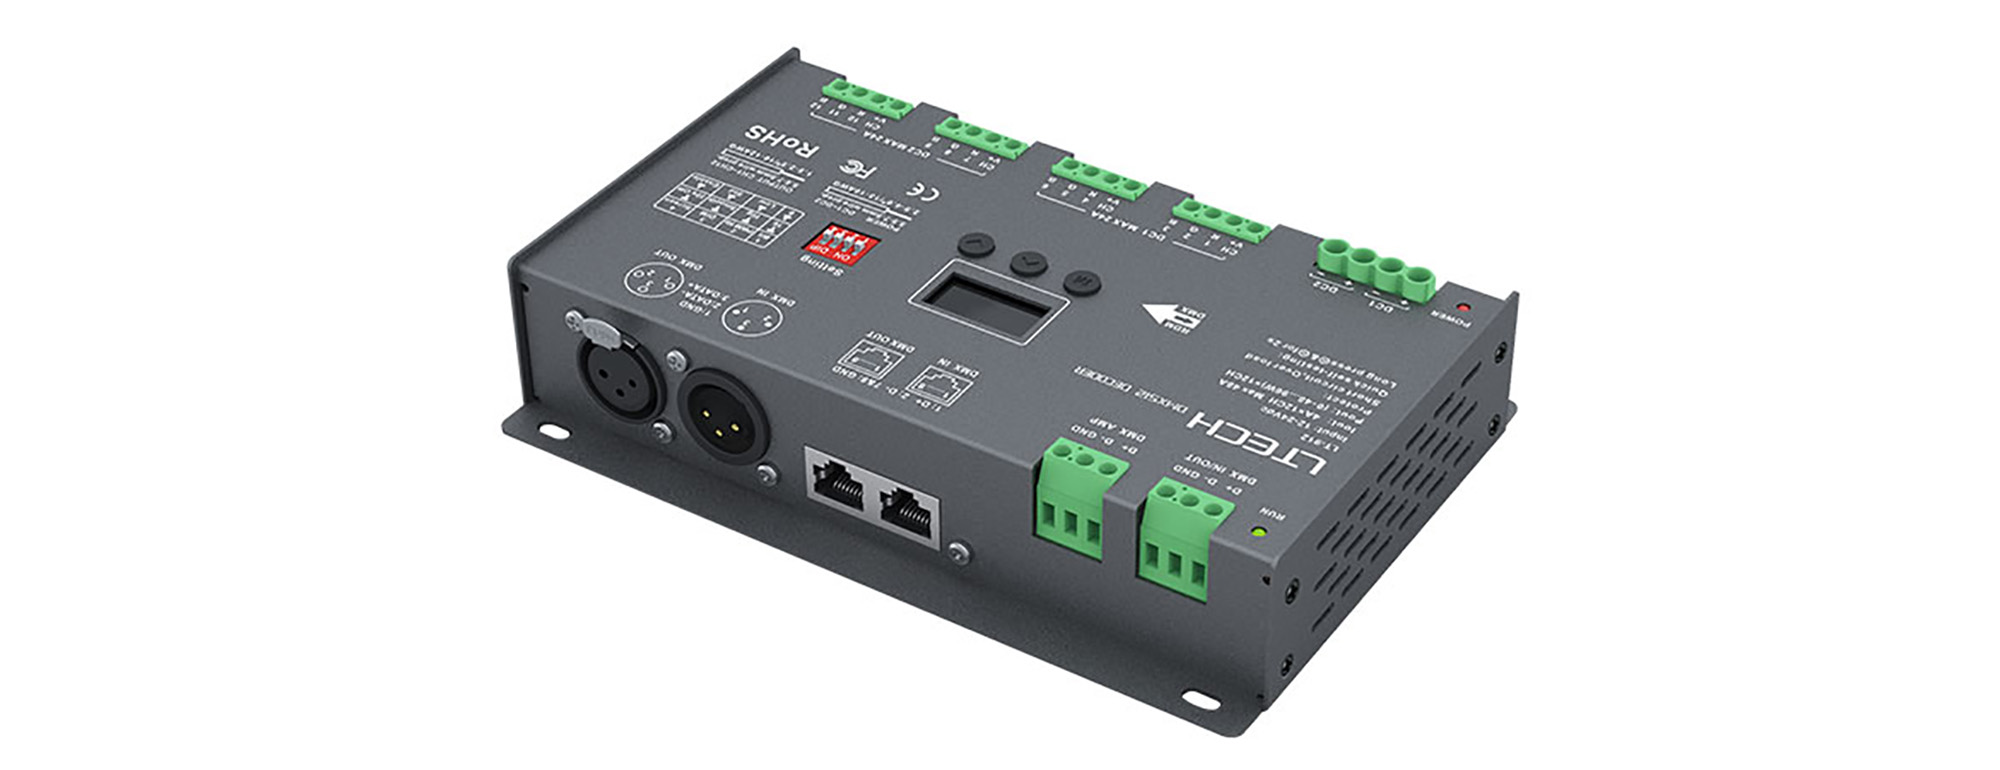 912  12Ch 4A CV DMX Decoder; 1152W Max.Power; XLR-3 ; Green connector & RJ45 Port; Self testing; DMX512/RDM I/P signal; IP20.